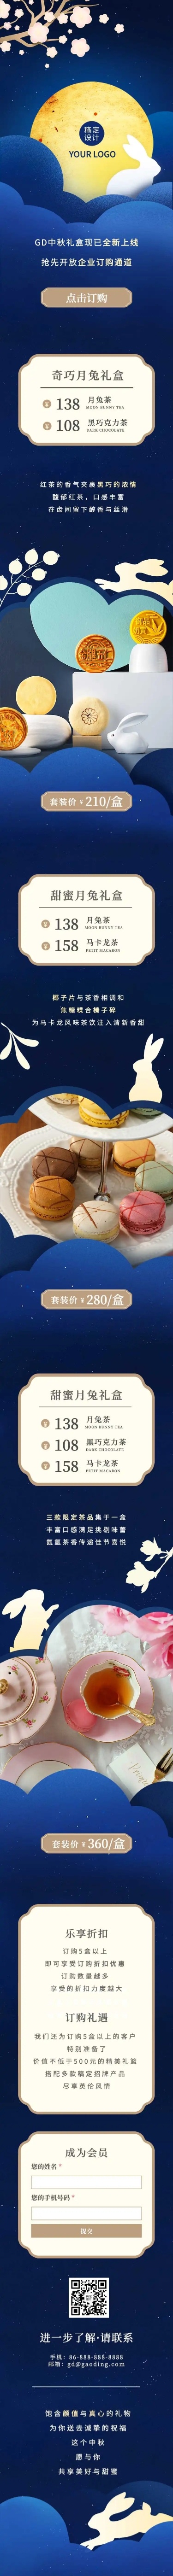 H5长页中秋节月饼产品推广定制企业礼品